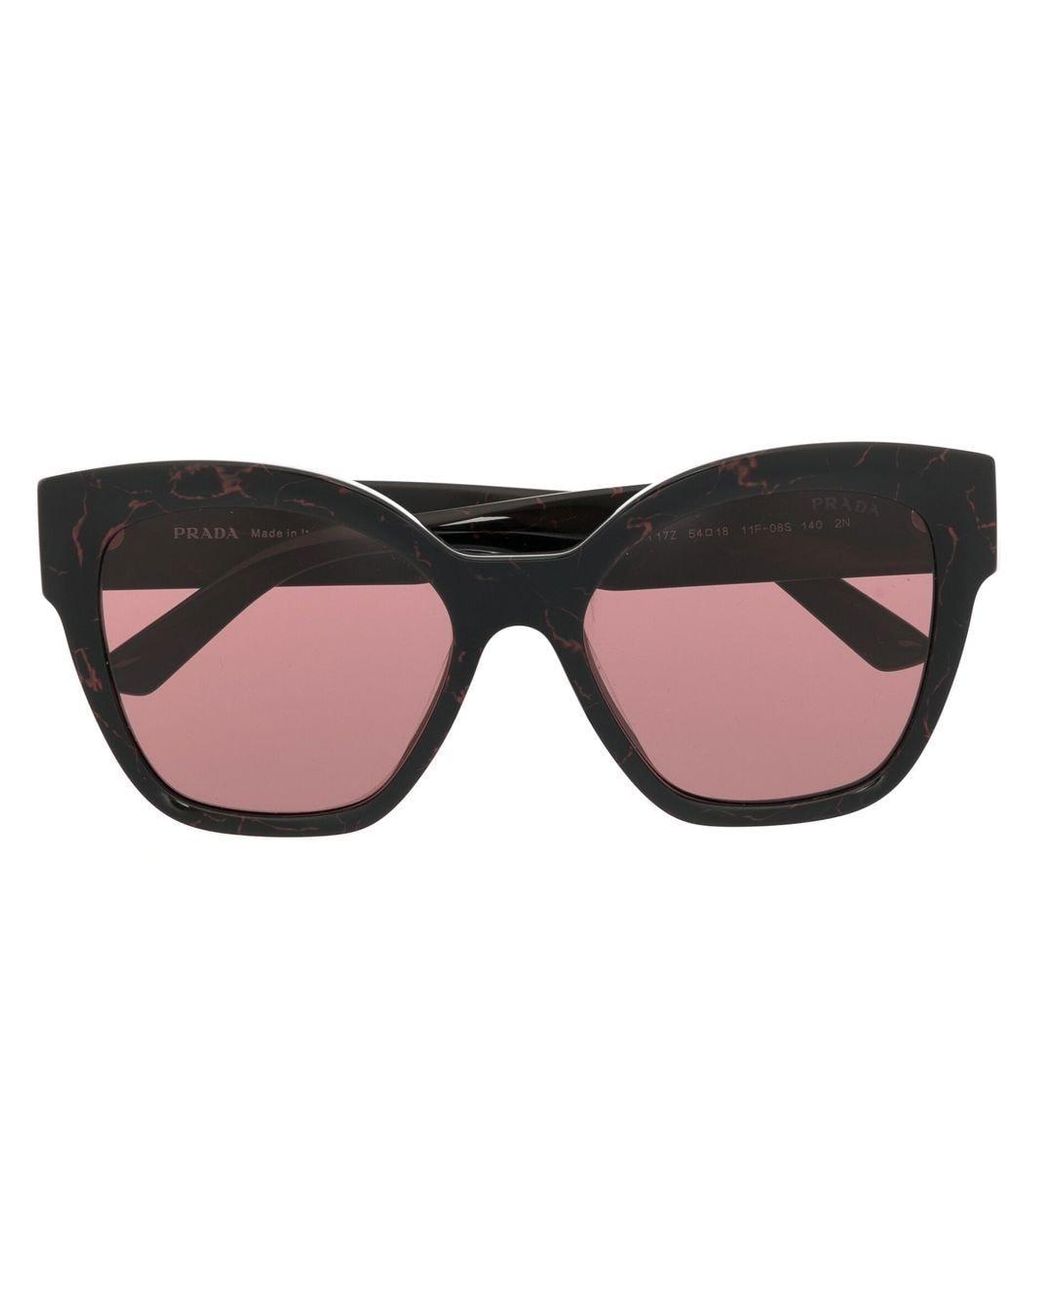 Prada Tortoiseshell-effect Cat-eye Sunglasses in Brown | Lyst